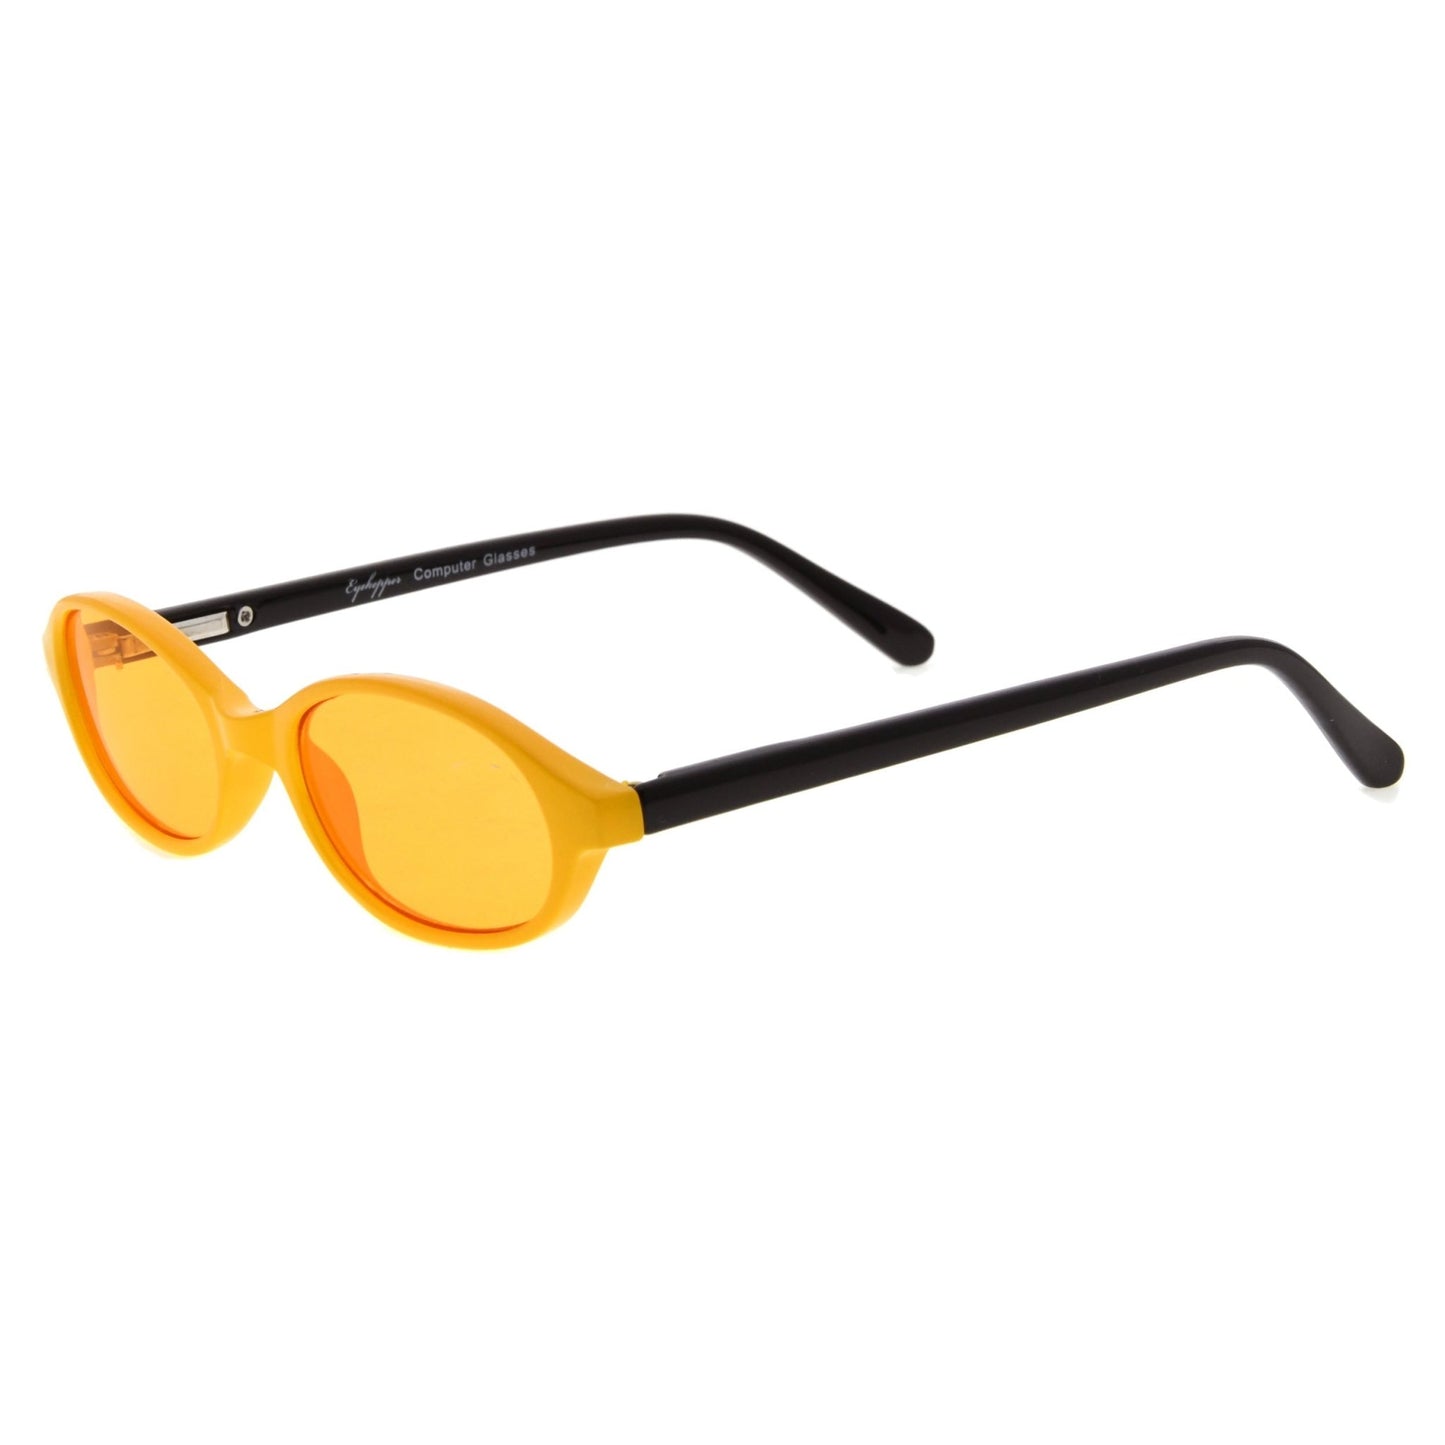 Stylish Oval Computer Eyeglasses for Kids Yellow/Black DSK01